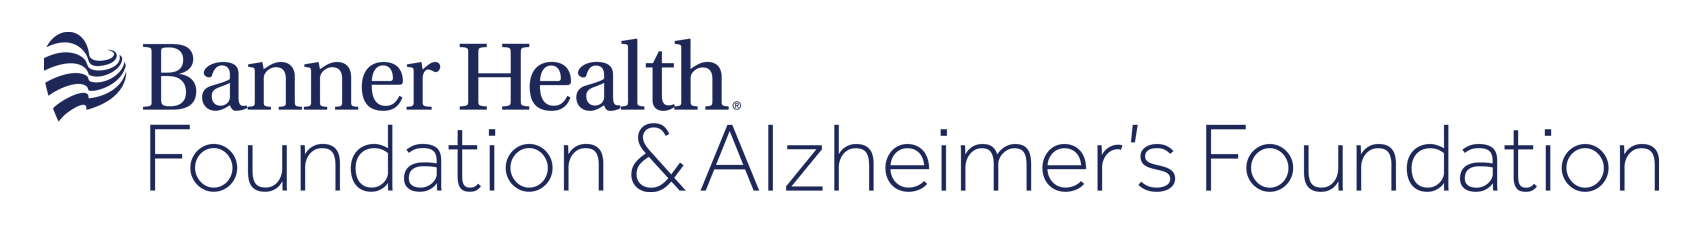 Banner Health Foundation  Alzheimers Foundation logo.png